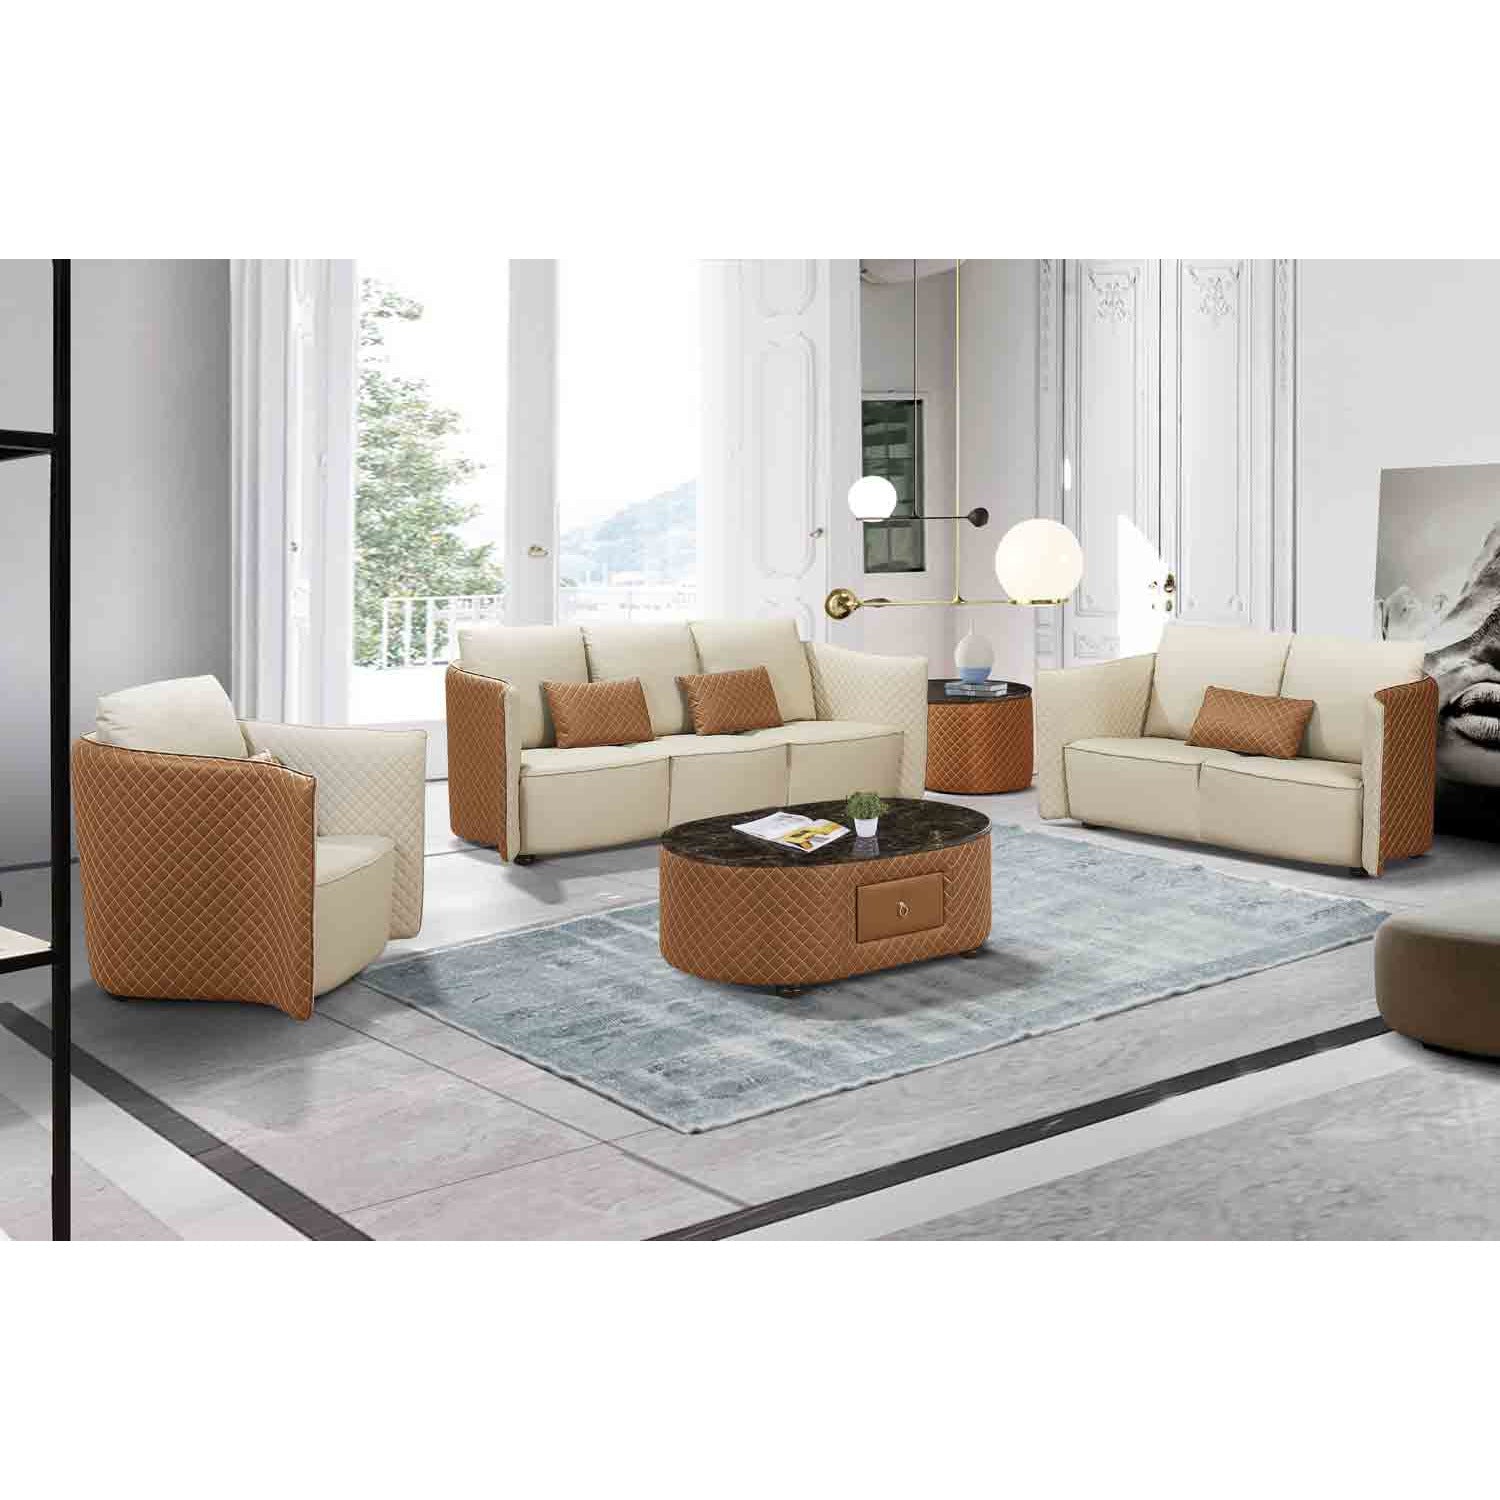 European Furniture - Makassar 3 Piece Living Room Set in Sand Beige & Orange - 52552-3SET - New Star Living